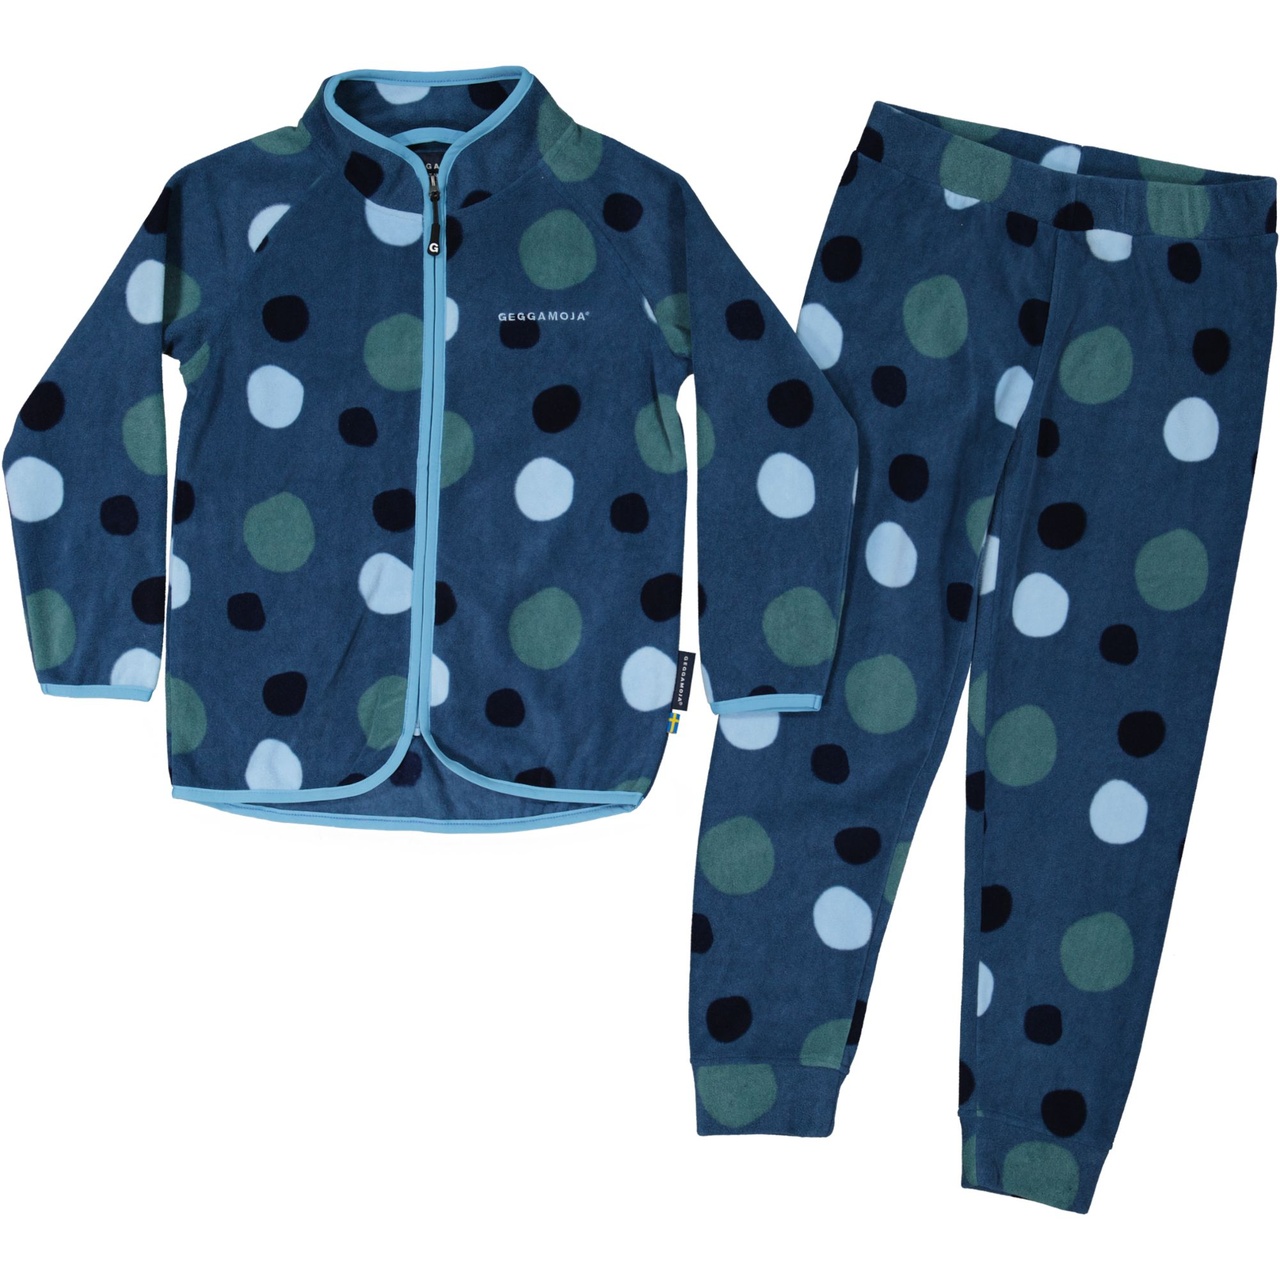 Fleece set Multi dots blue 134/140